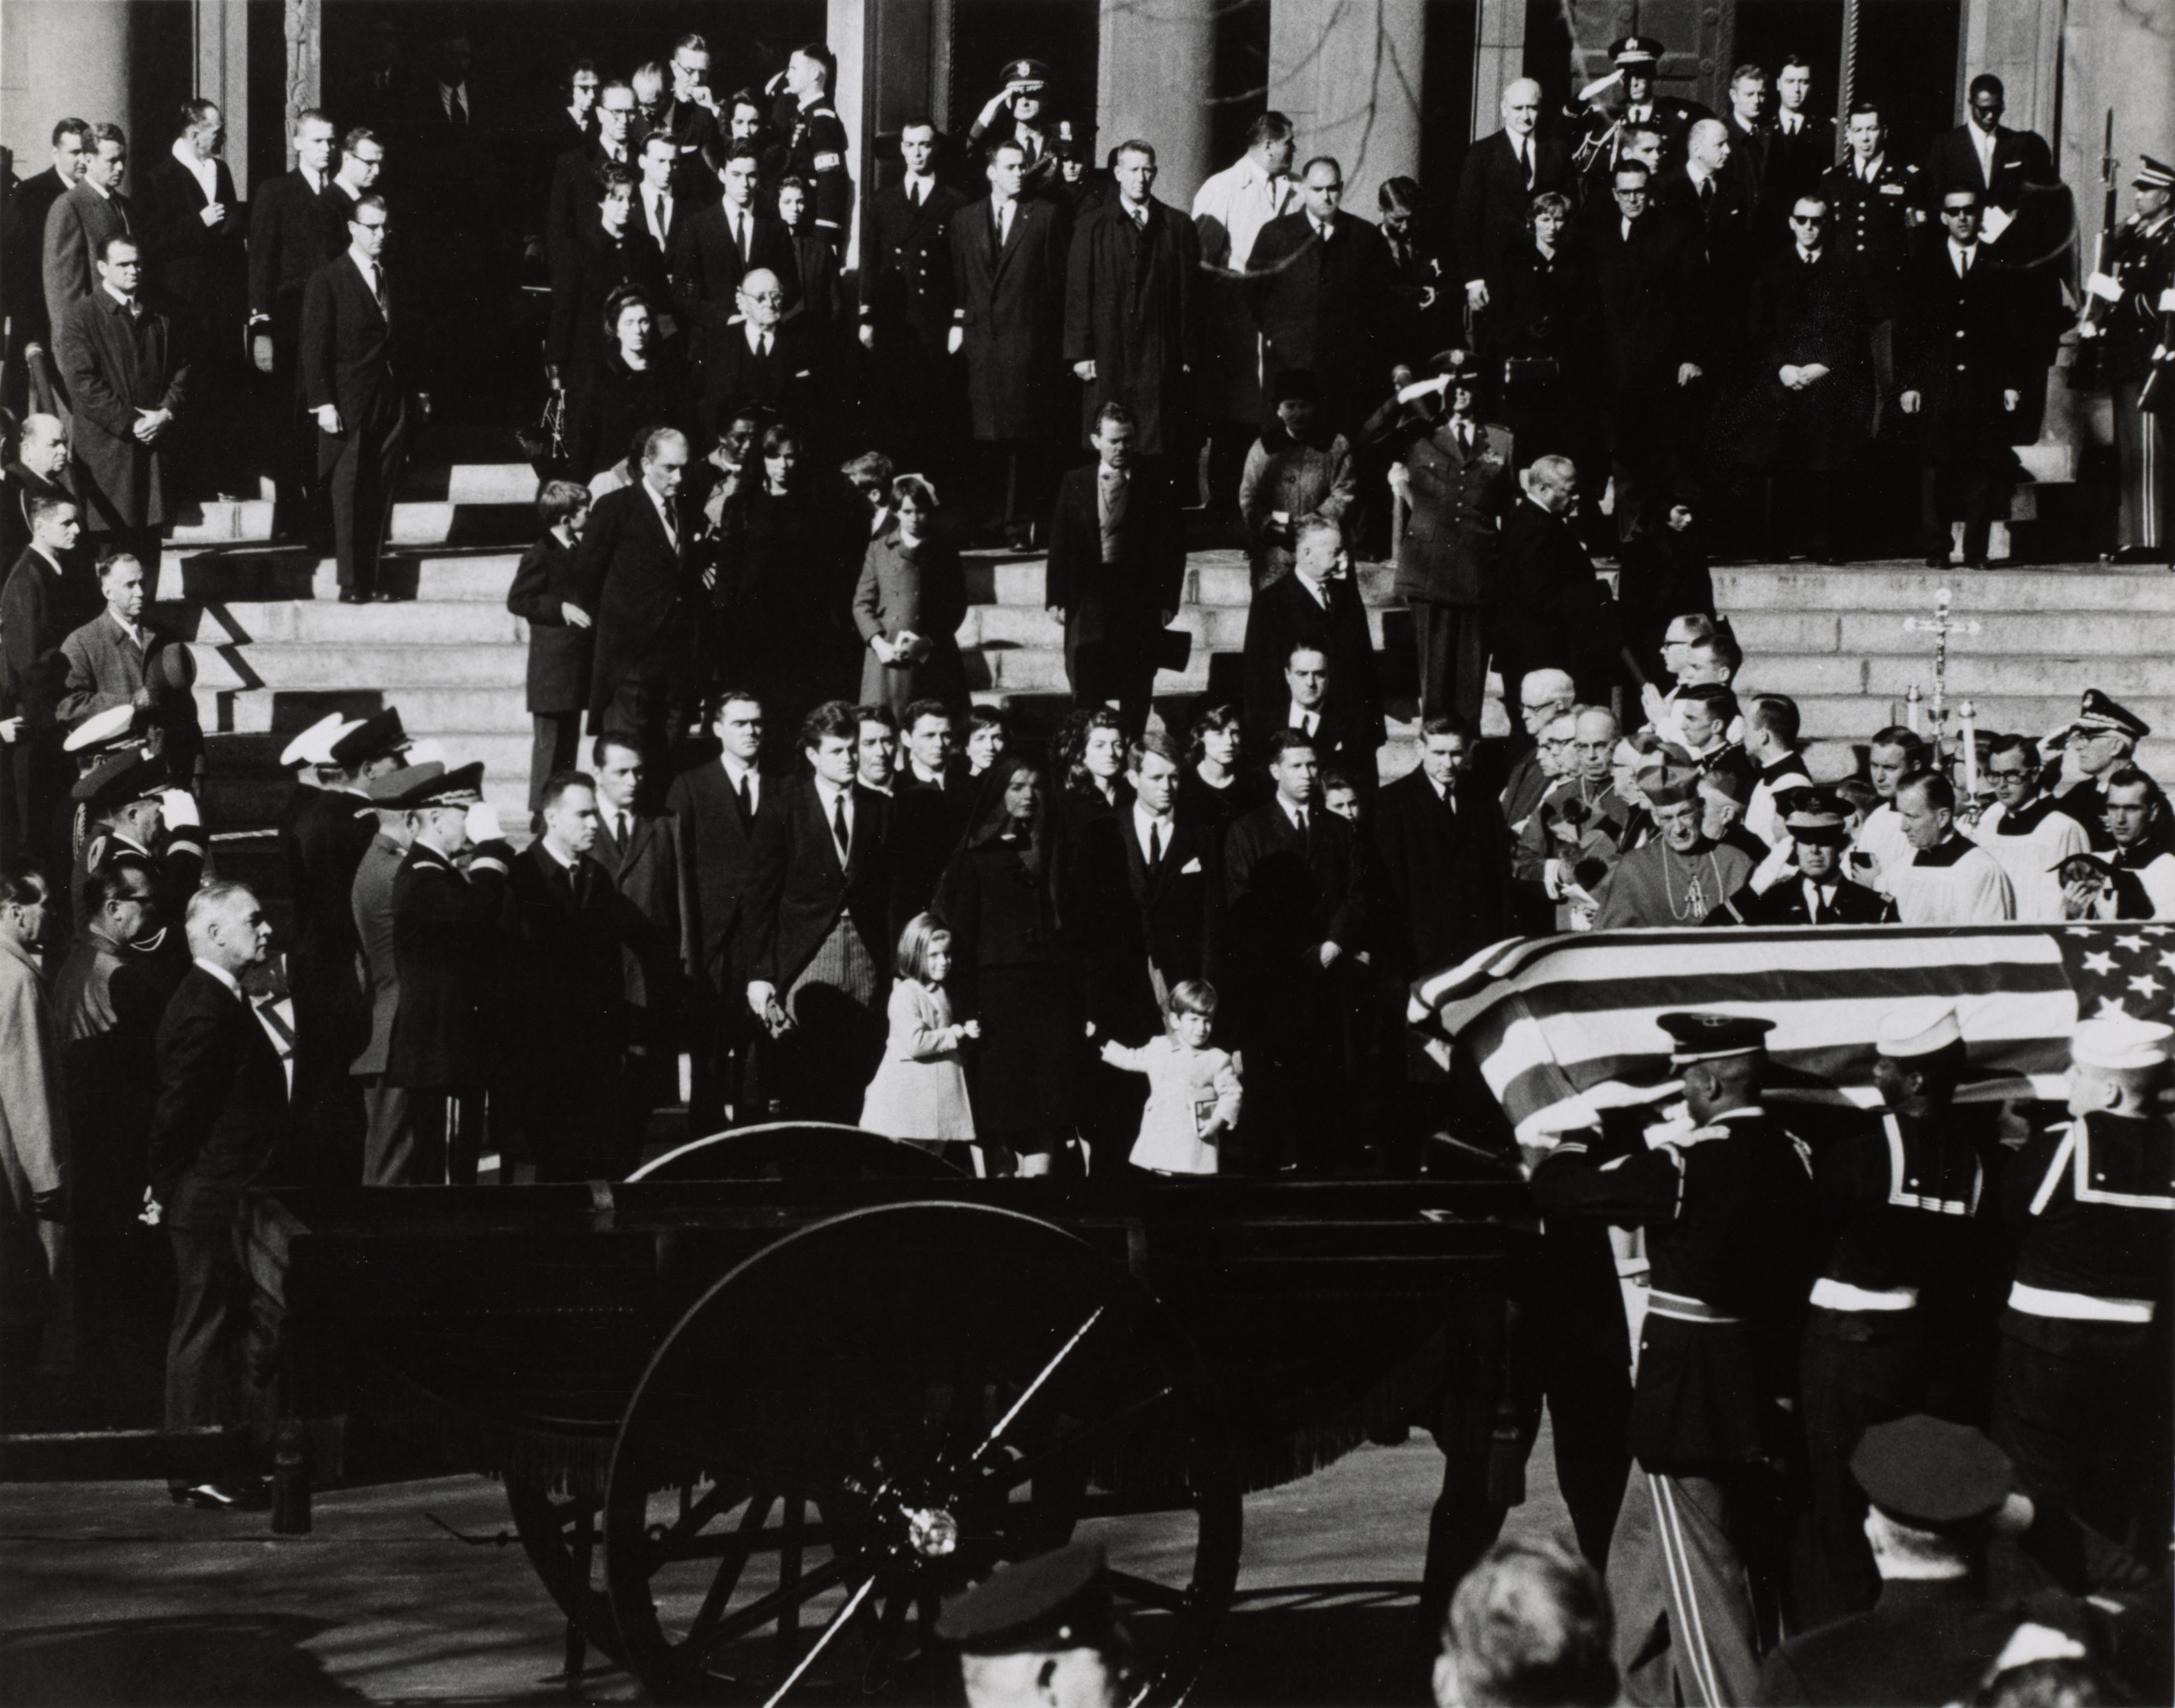 Funeral of President Kennedy, Washington, D.C.